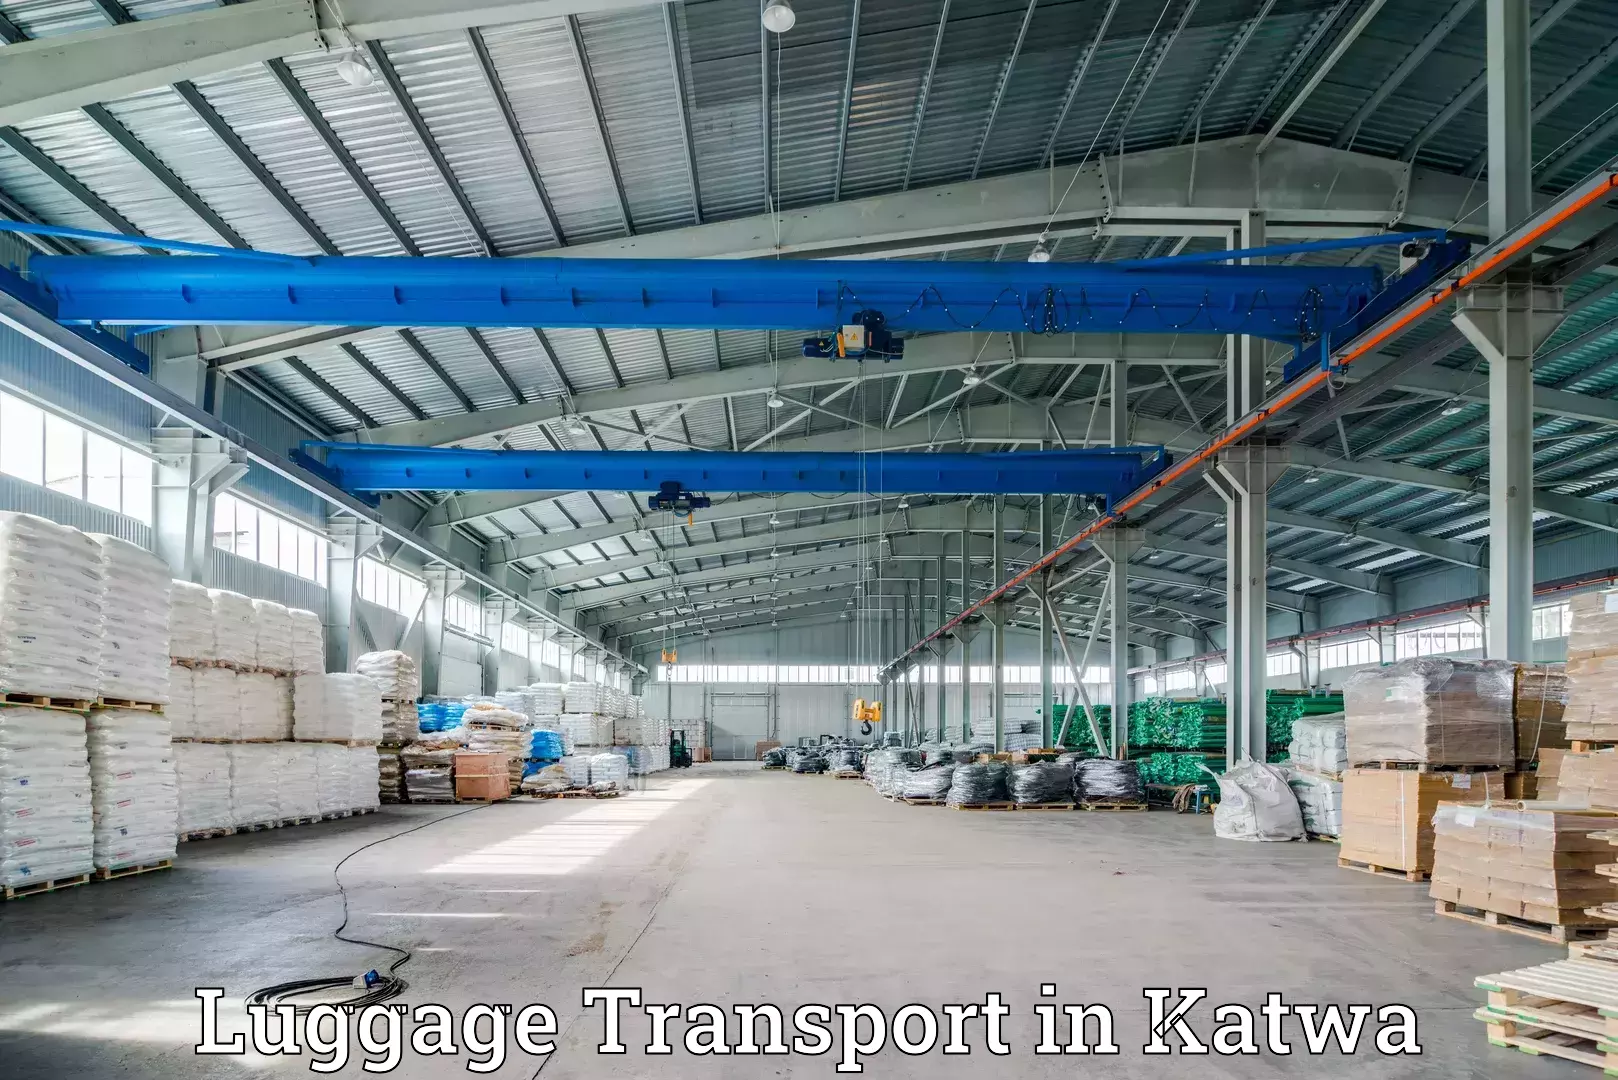 Rural baggage transport in Katwa